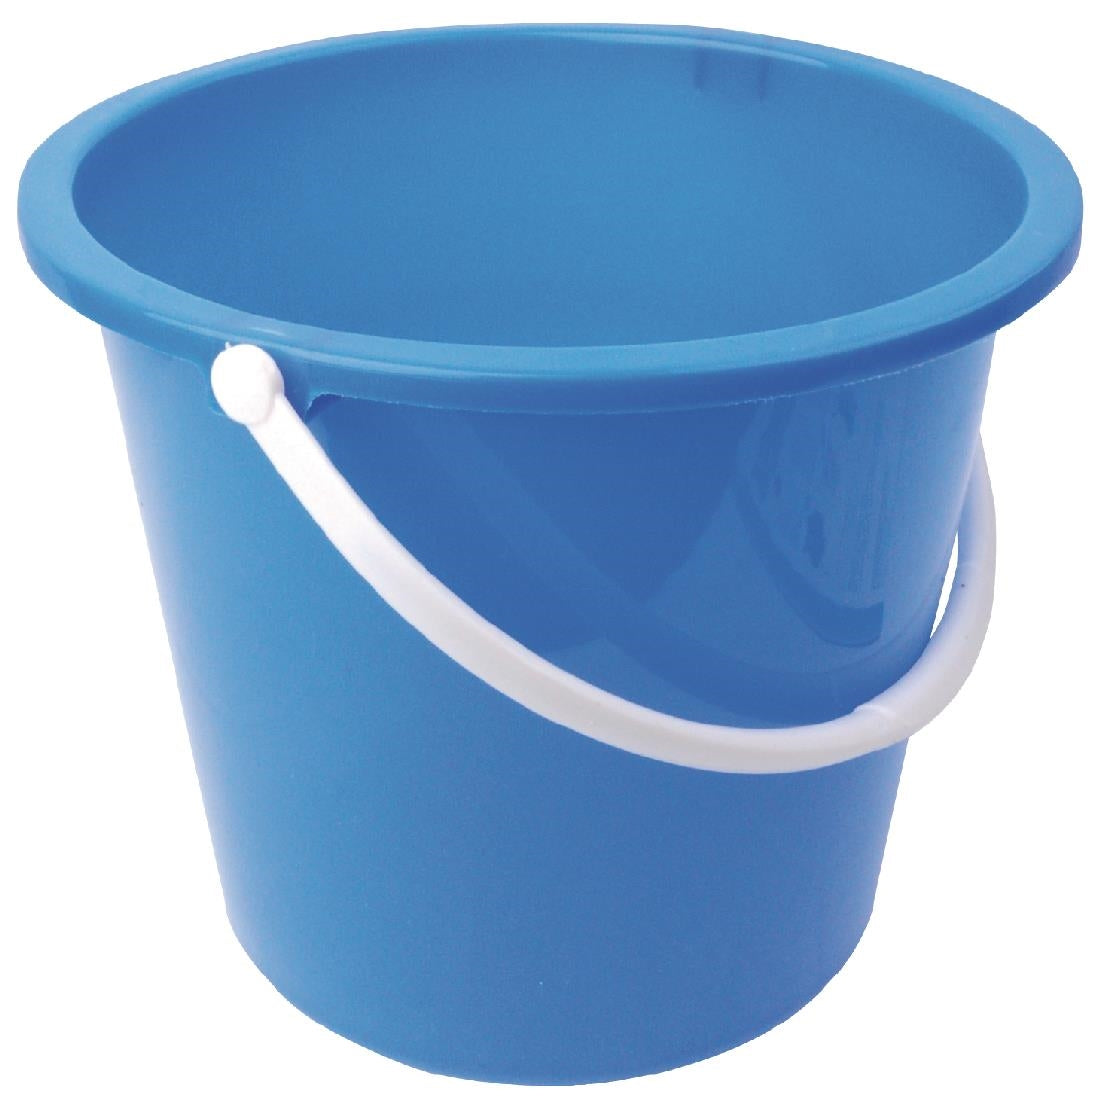 Jantex Round Plastic Bucket Blue